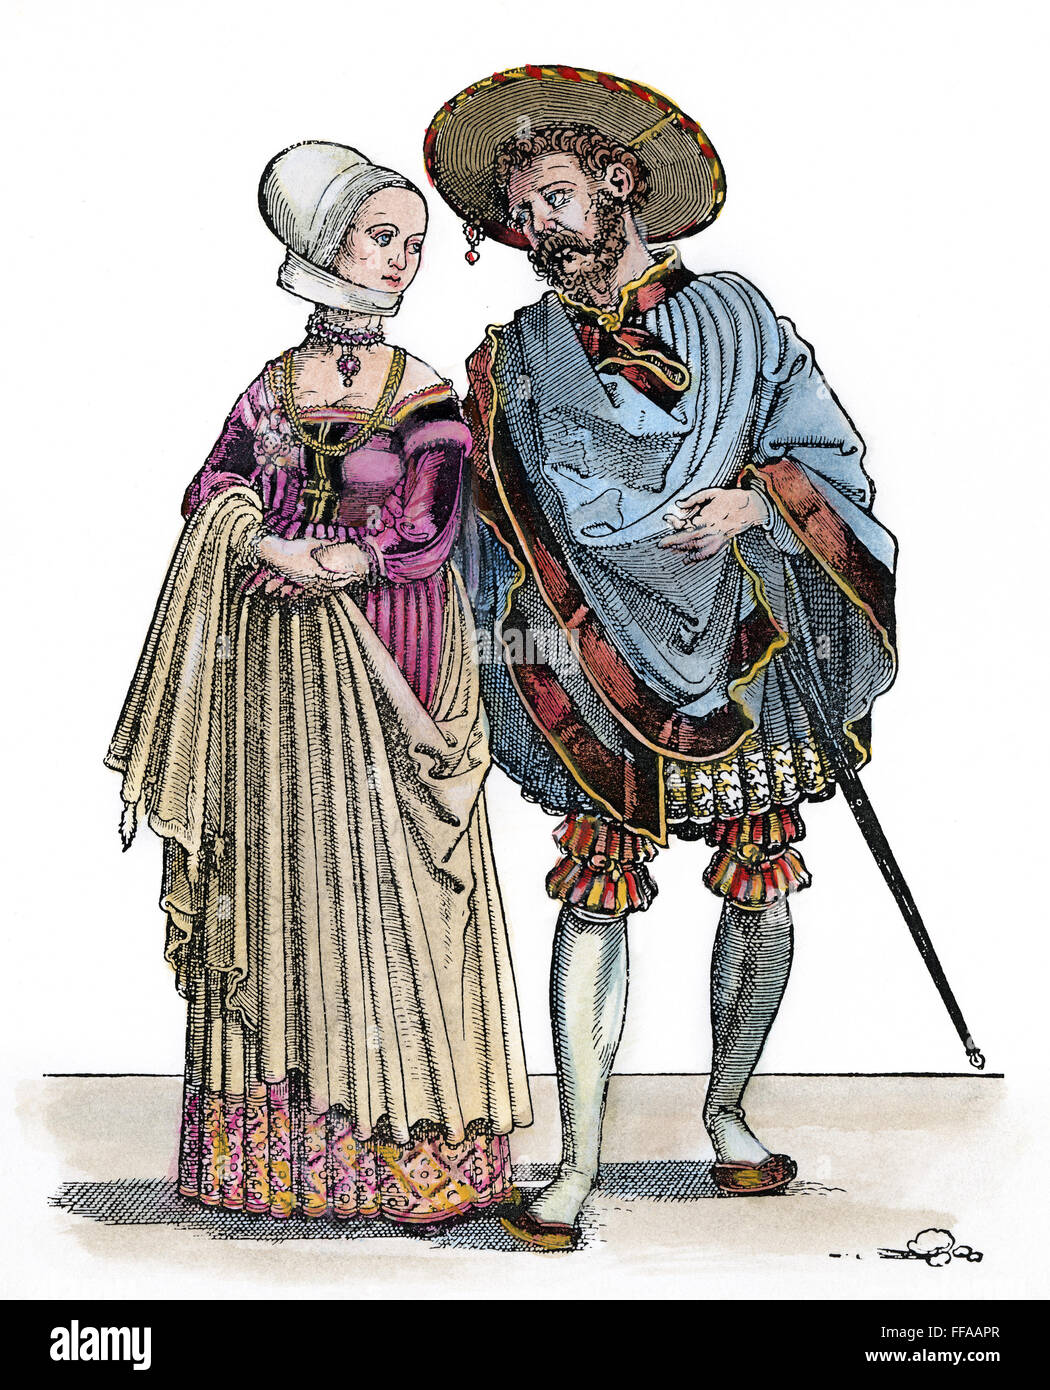 Coppia giovane, c1530. /NA giovane gentiluomo e sua moglie. Xilografia, c1530, da Hans Sebald Beham. Foto Stock